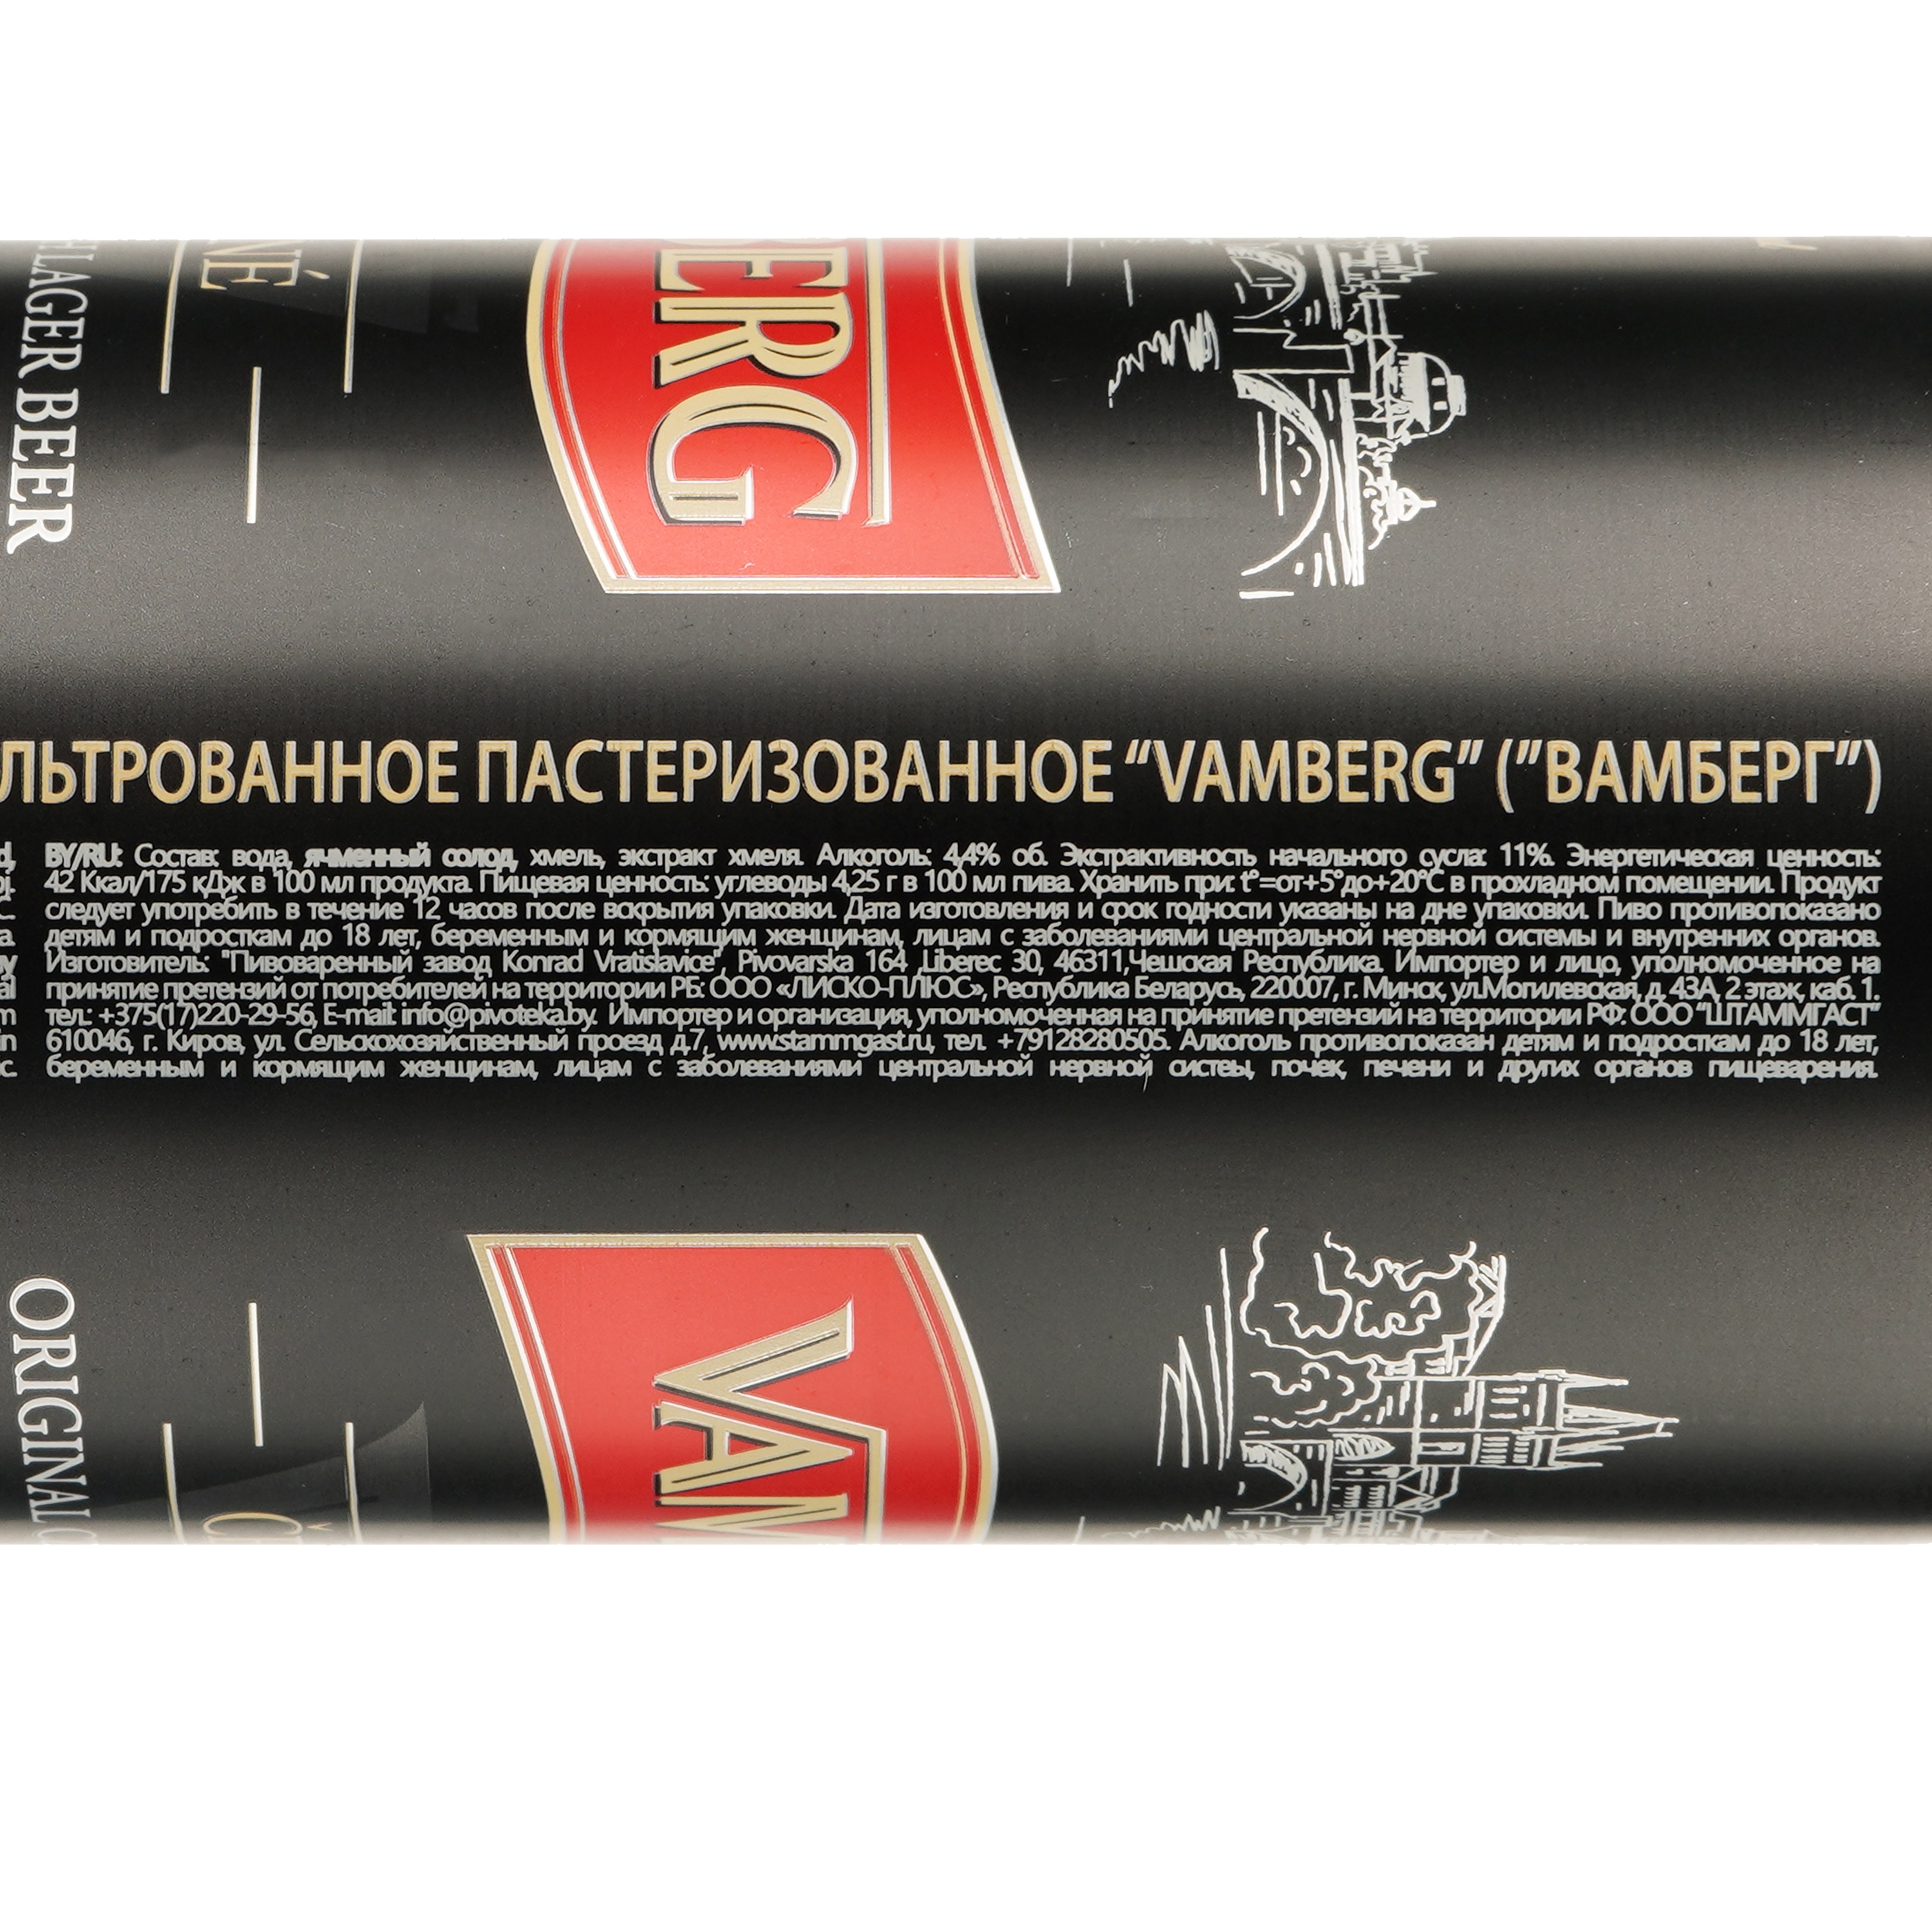 Пиво Vamberg Dark Lager, темное, фильтрованное, 4,4%, ж/б, 0,5 л - фото 4